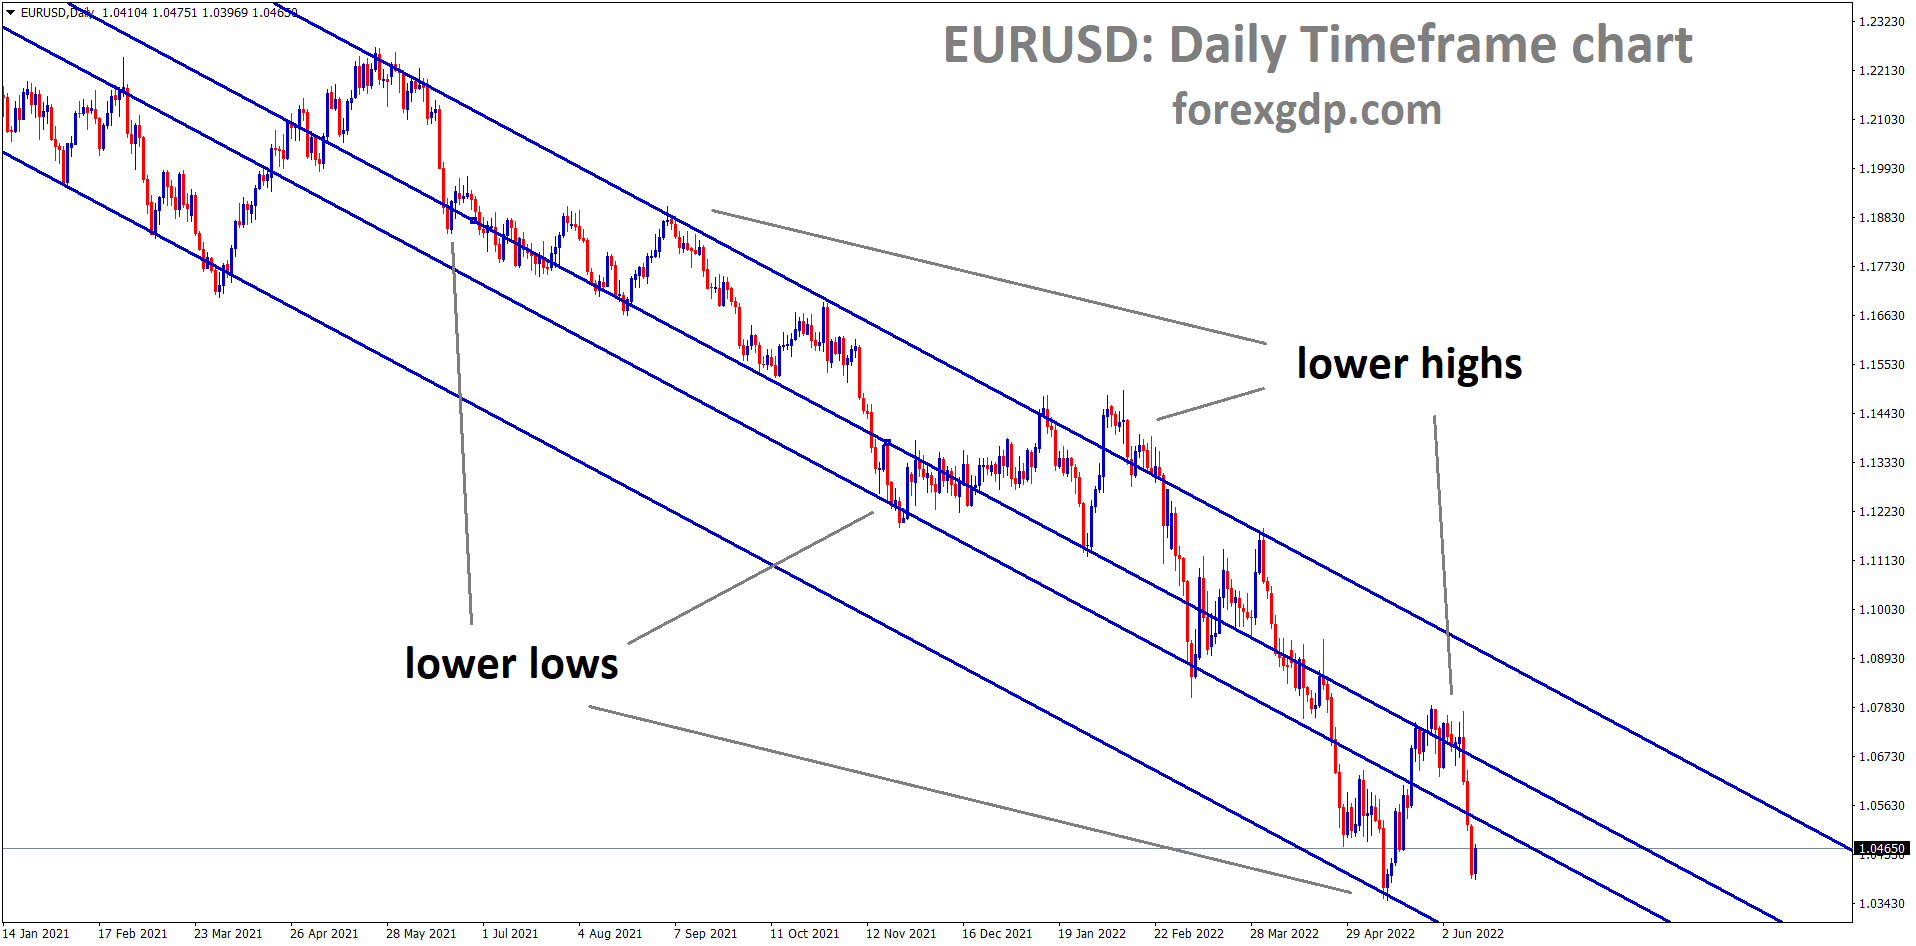 EURUSD Daily timeframe chart showing bearish market conditions